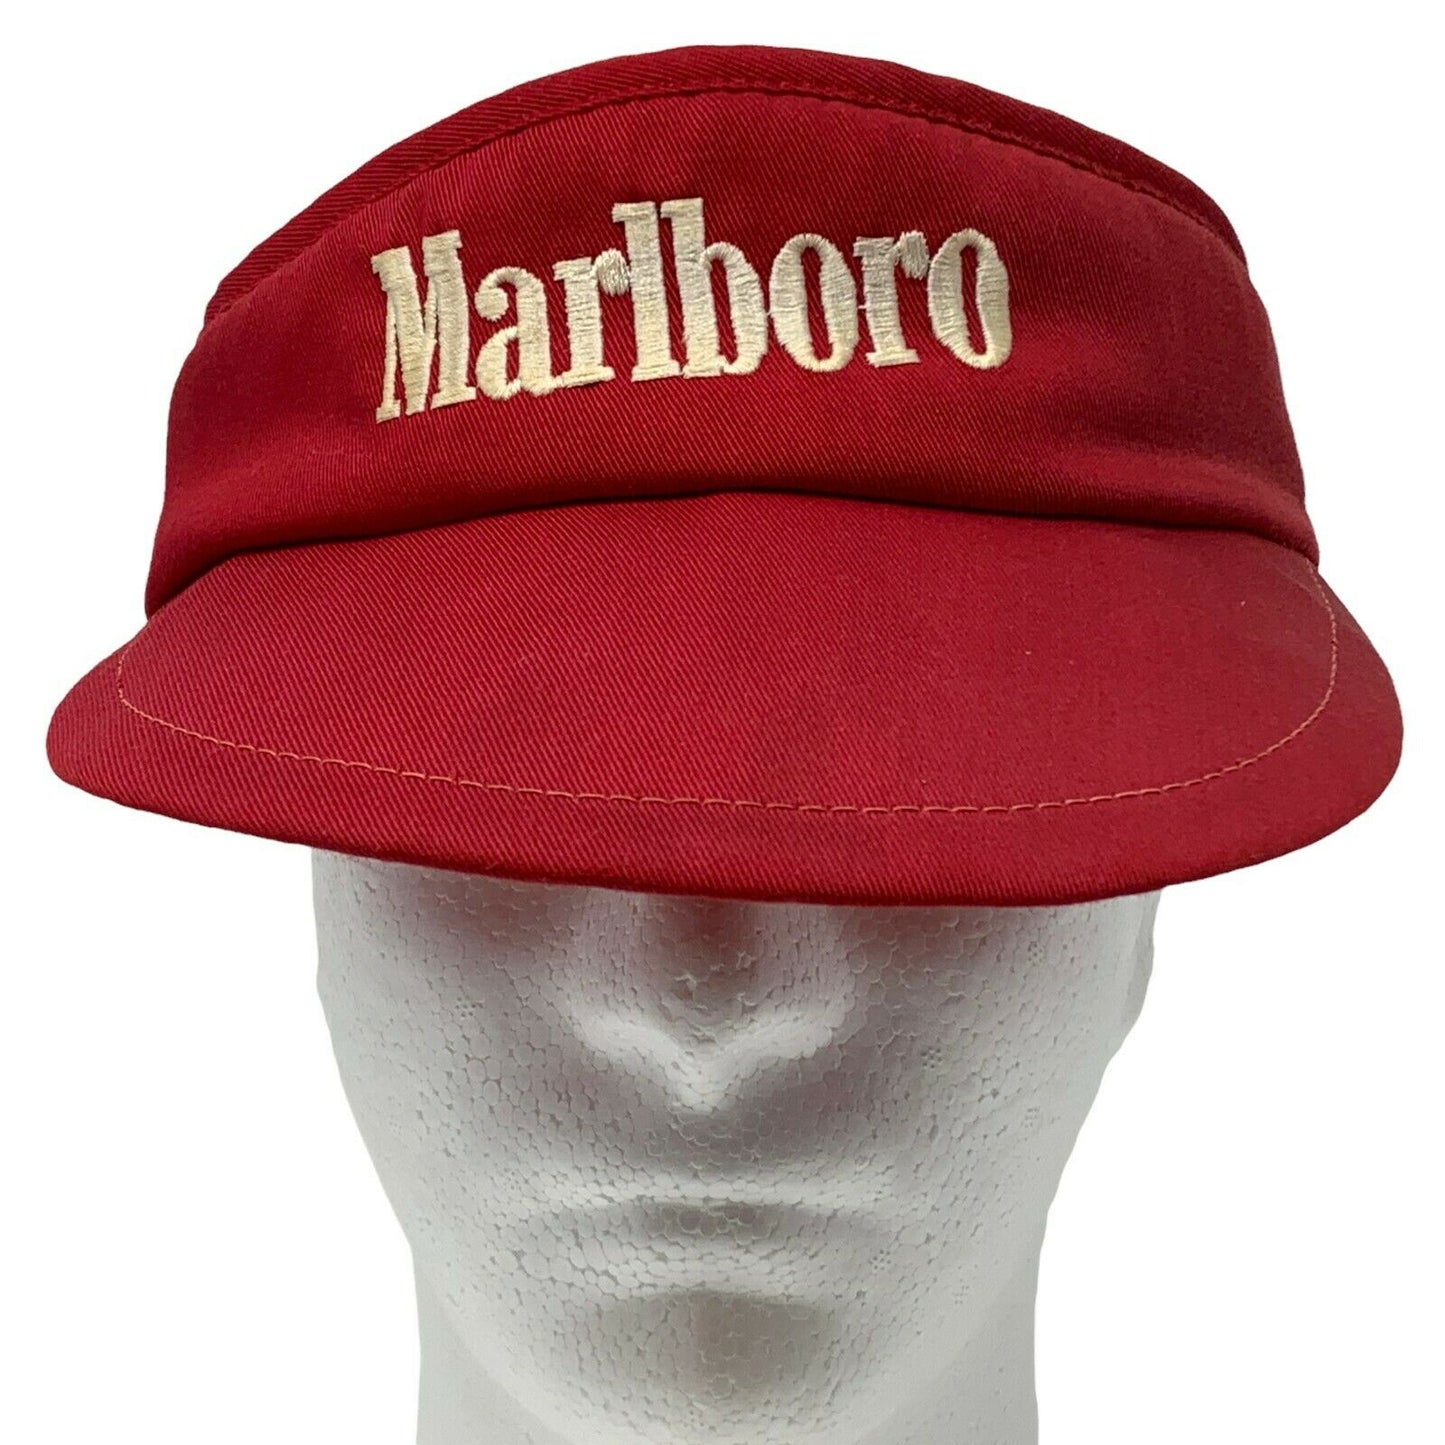 Vintage 80s Marlboro Sun Visor Hat Red Tobacco Tobacciana Made In USA